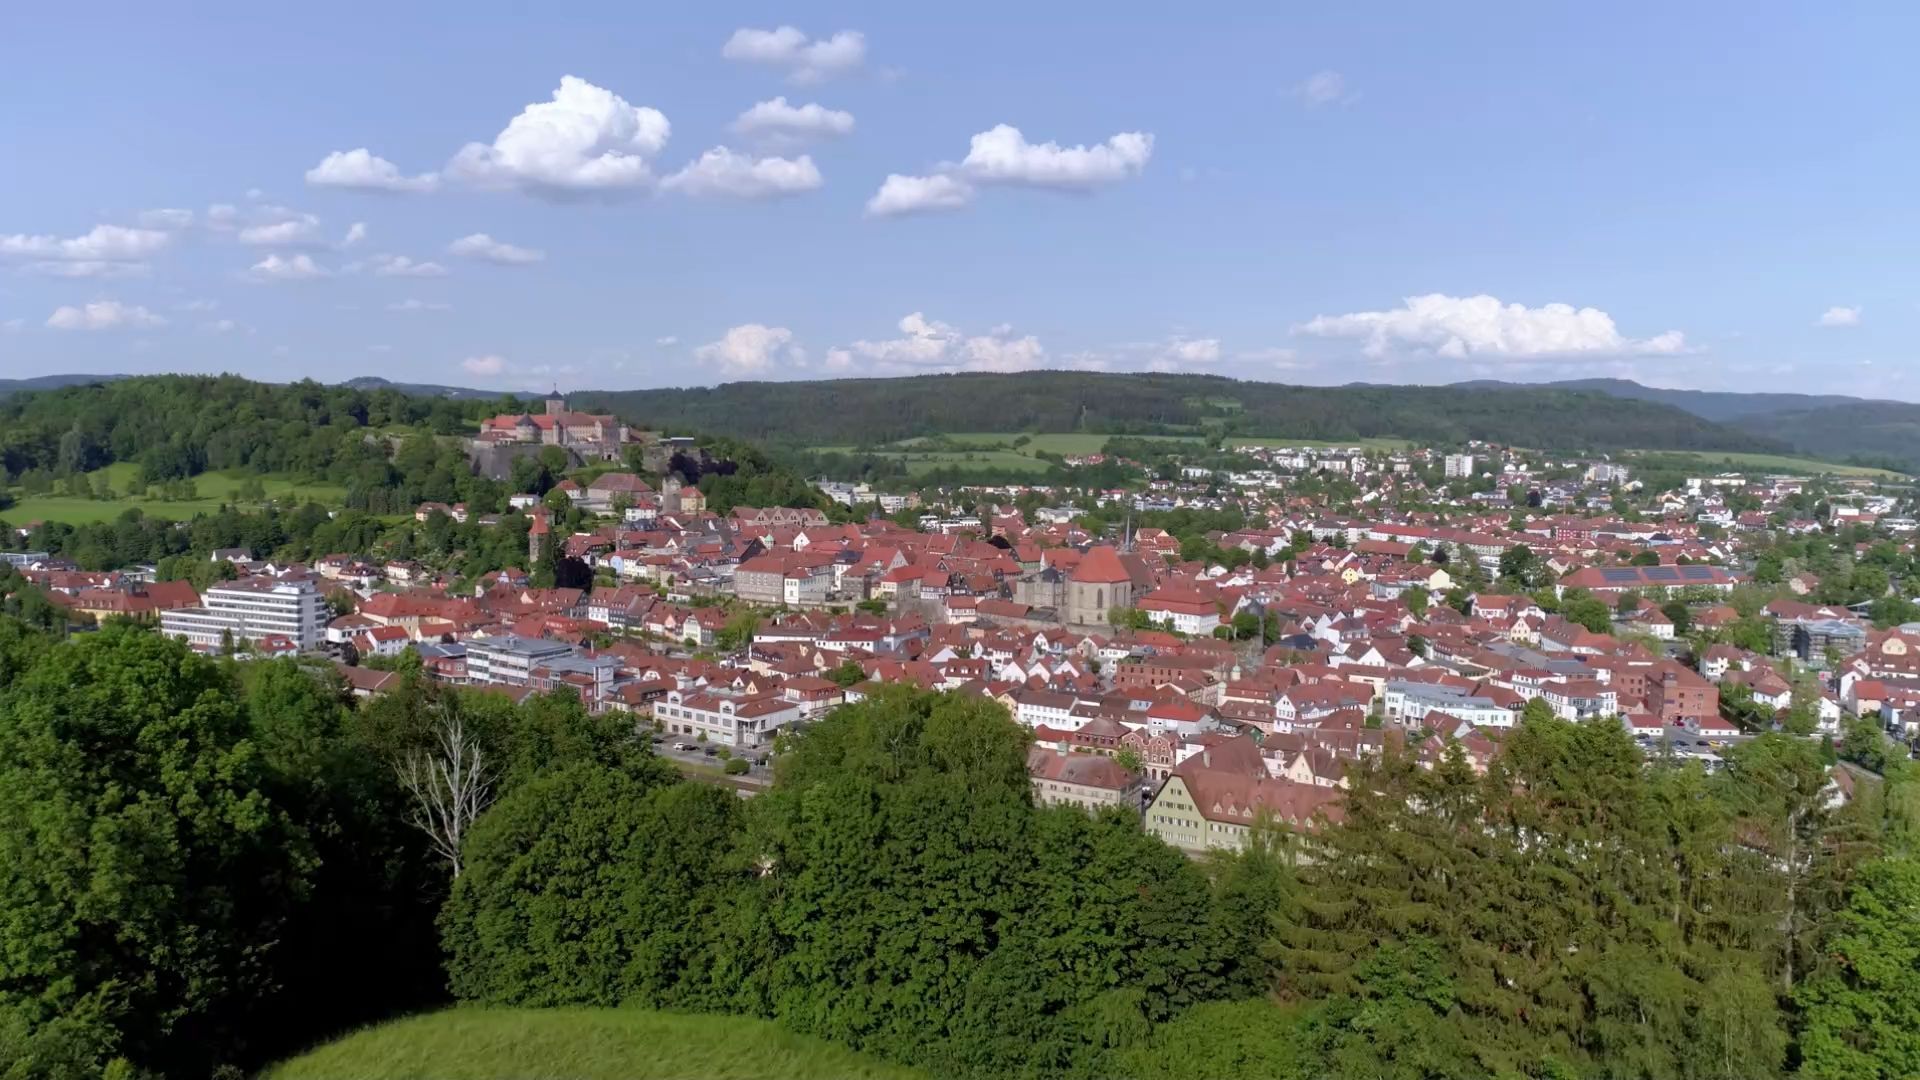 The birthplace of Lucas Cranach the Elder: That's Kronach